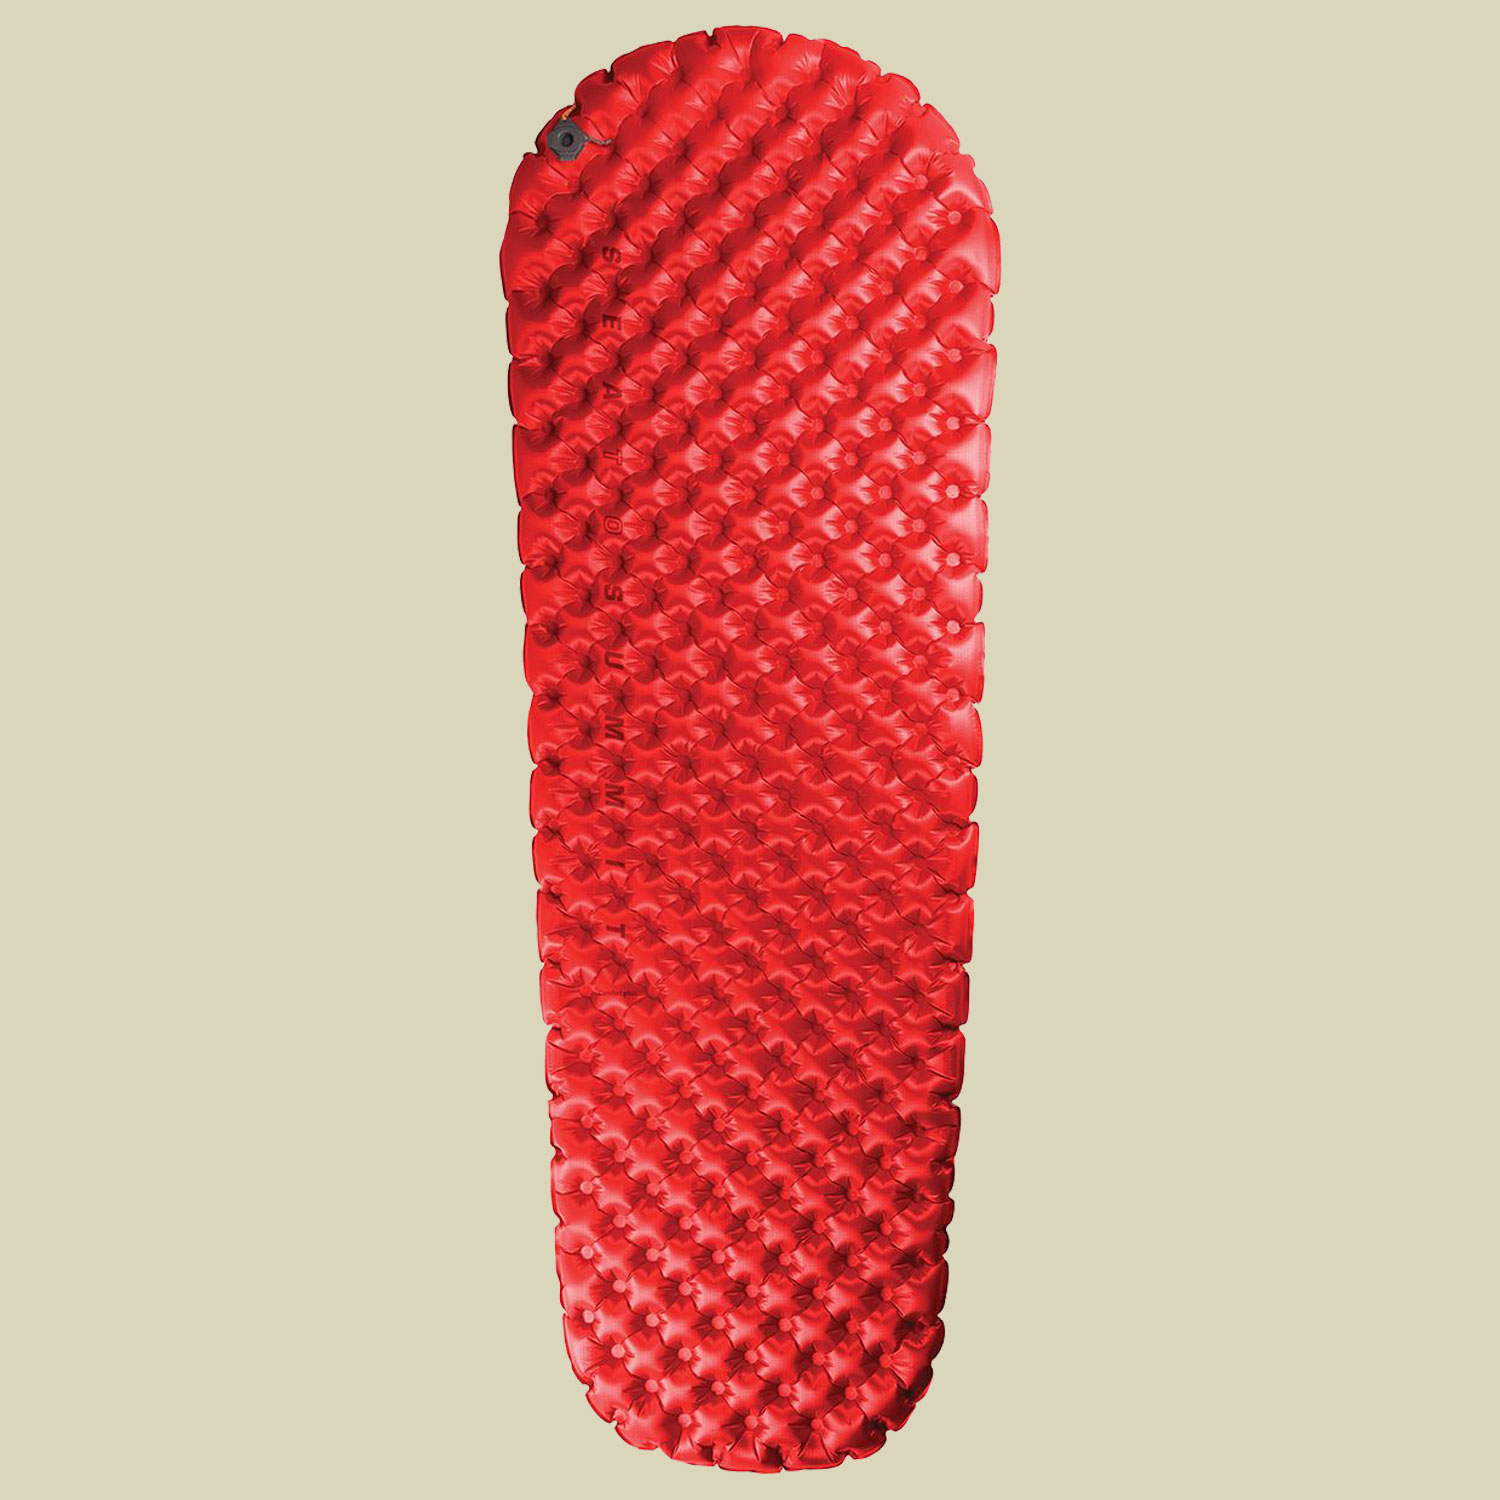 Comfort Plus Insulated Air Liegefläche 183 x 55 cm Farbe red